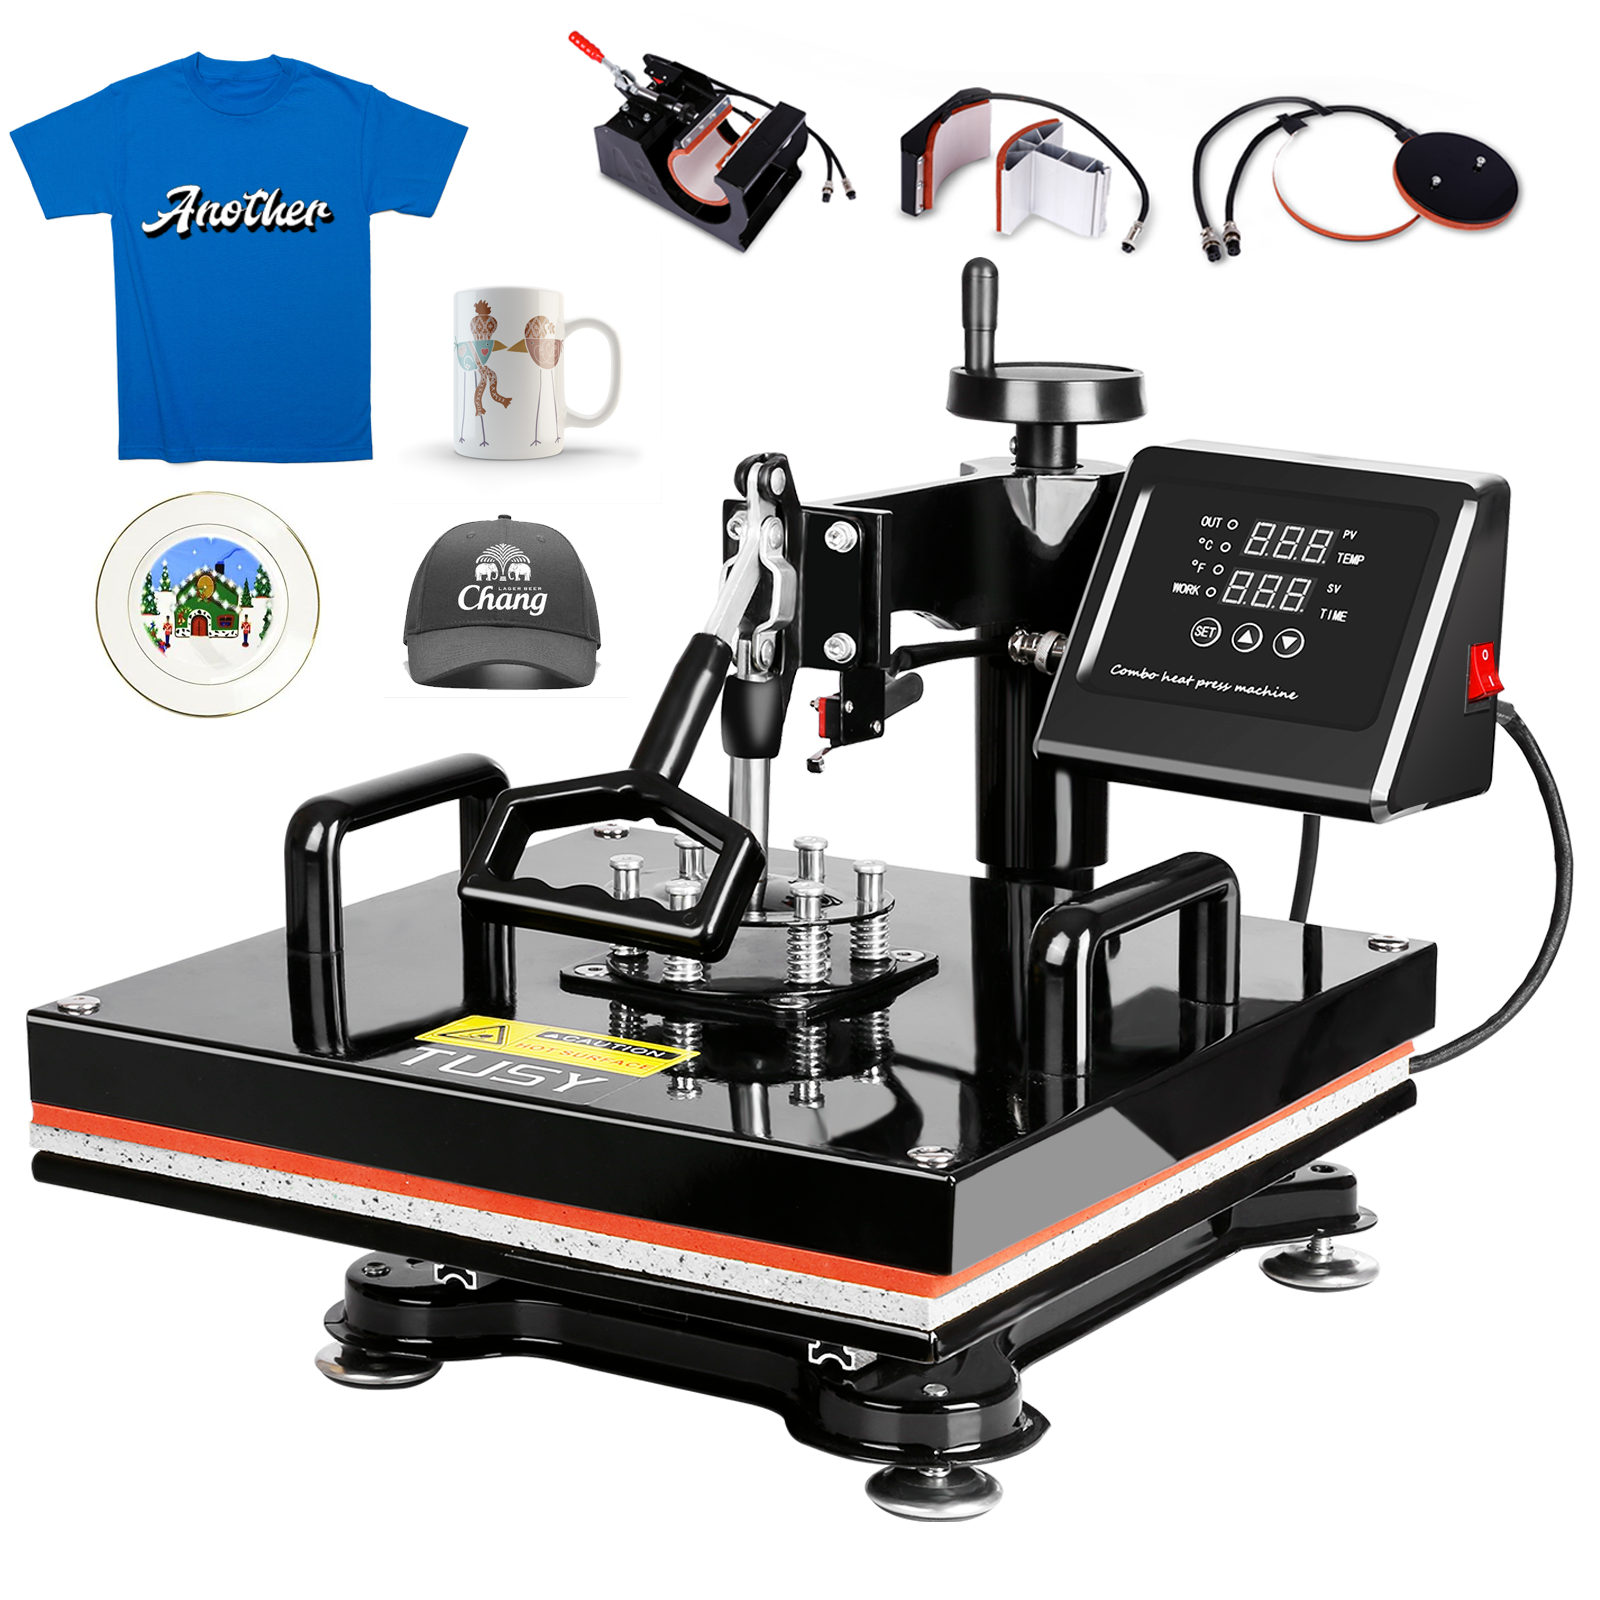 15x15 Tusy Heat Press Machine Pro 5 En 1 Heat Transfer Press